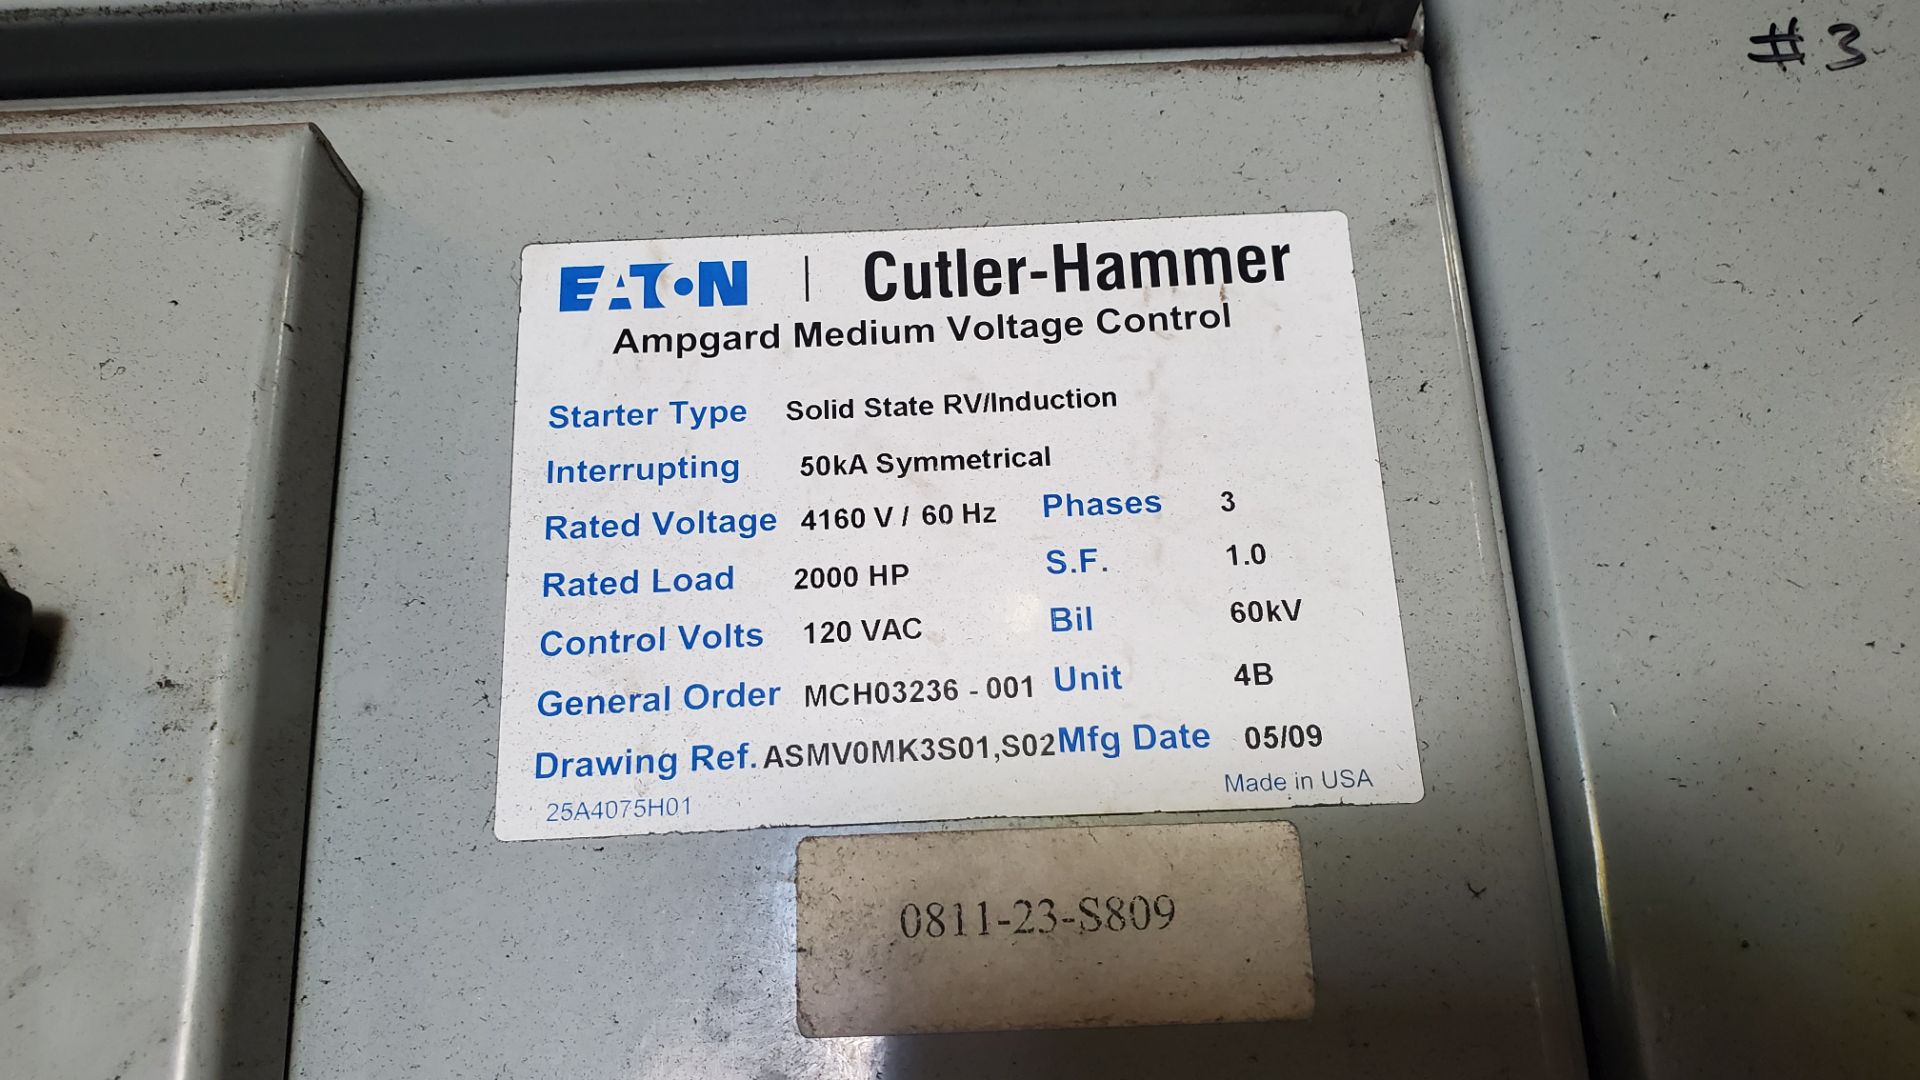 (Lot) Cutler-Hammer Amp Guard Medium Voltage Control Type Solid Starter RV/Induction 50 KA - Image 4 of 5